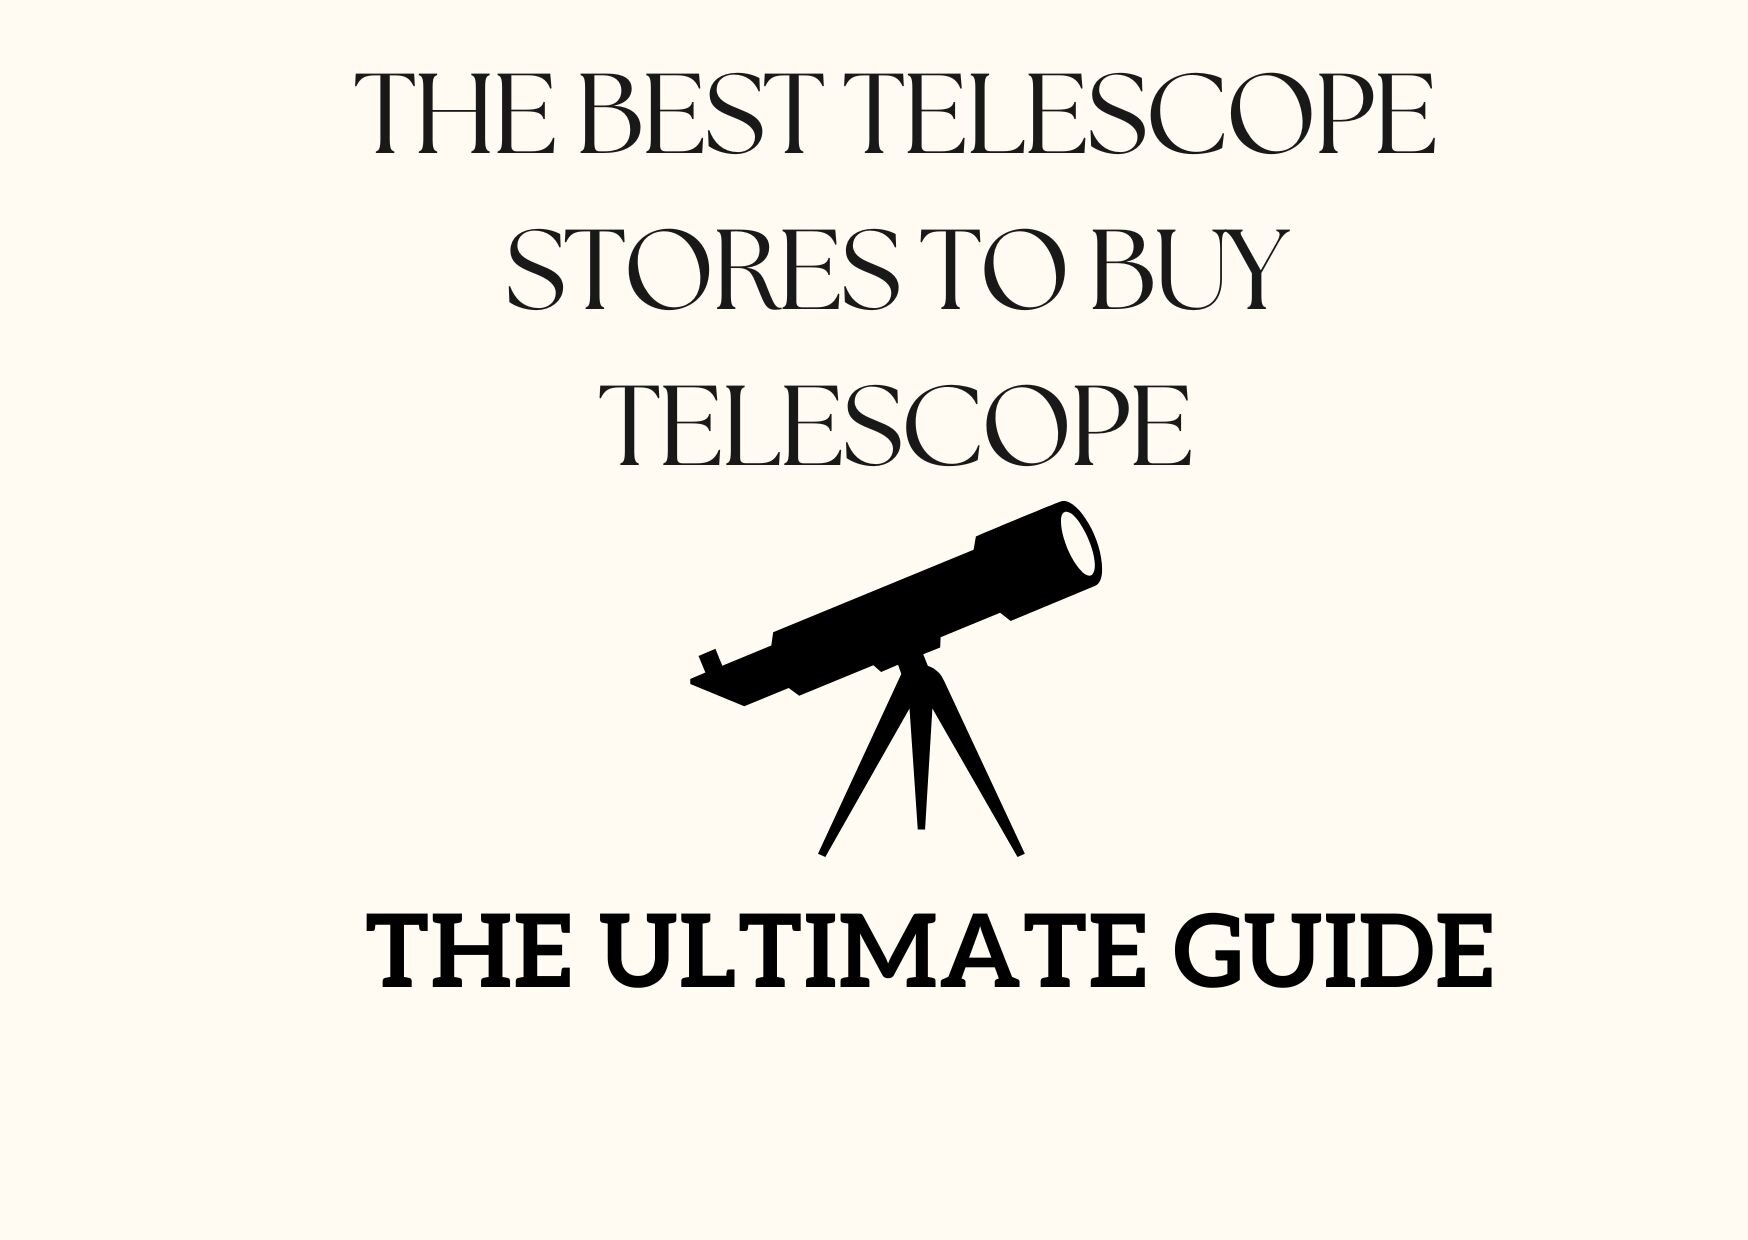 the Best Telescope Store to Buy Telescope (1)